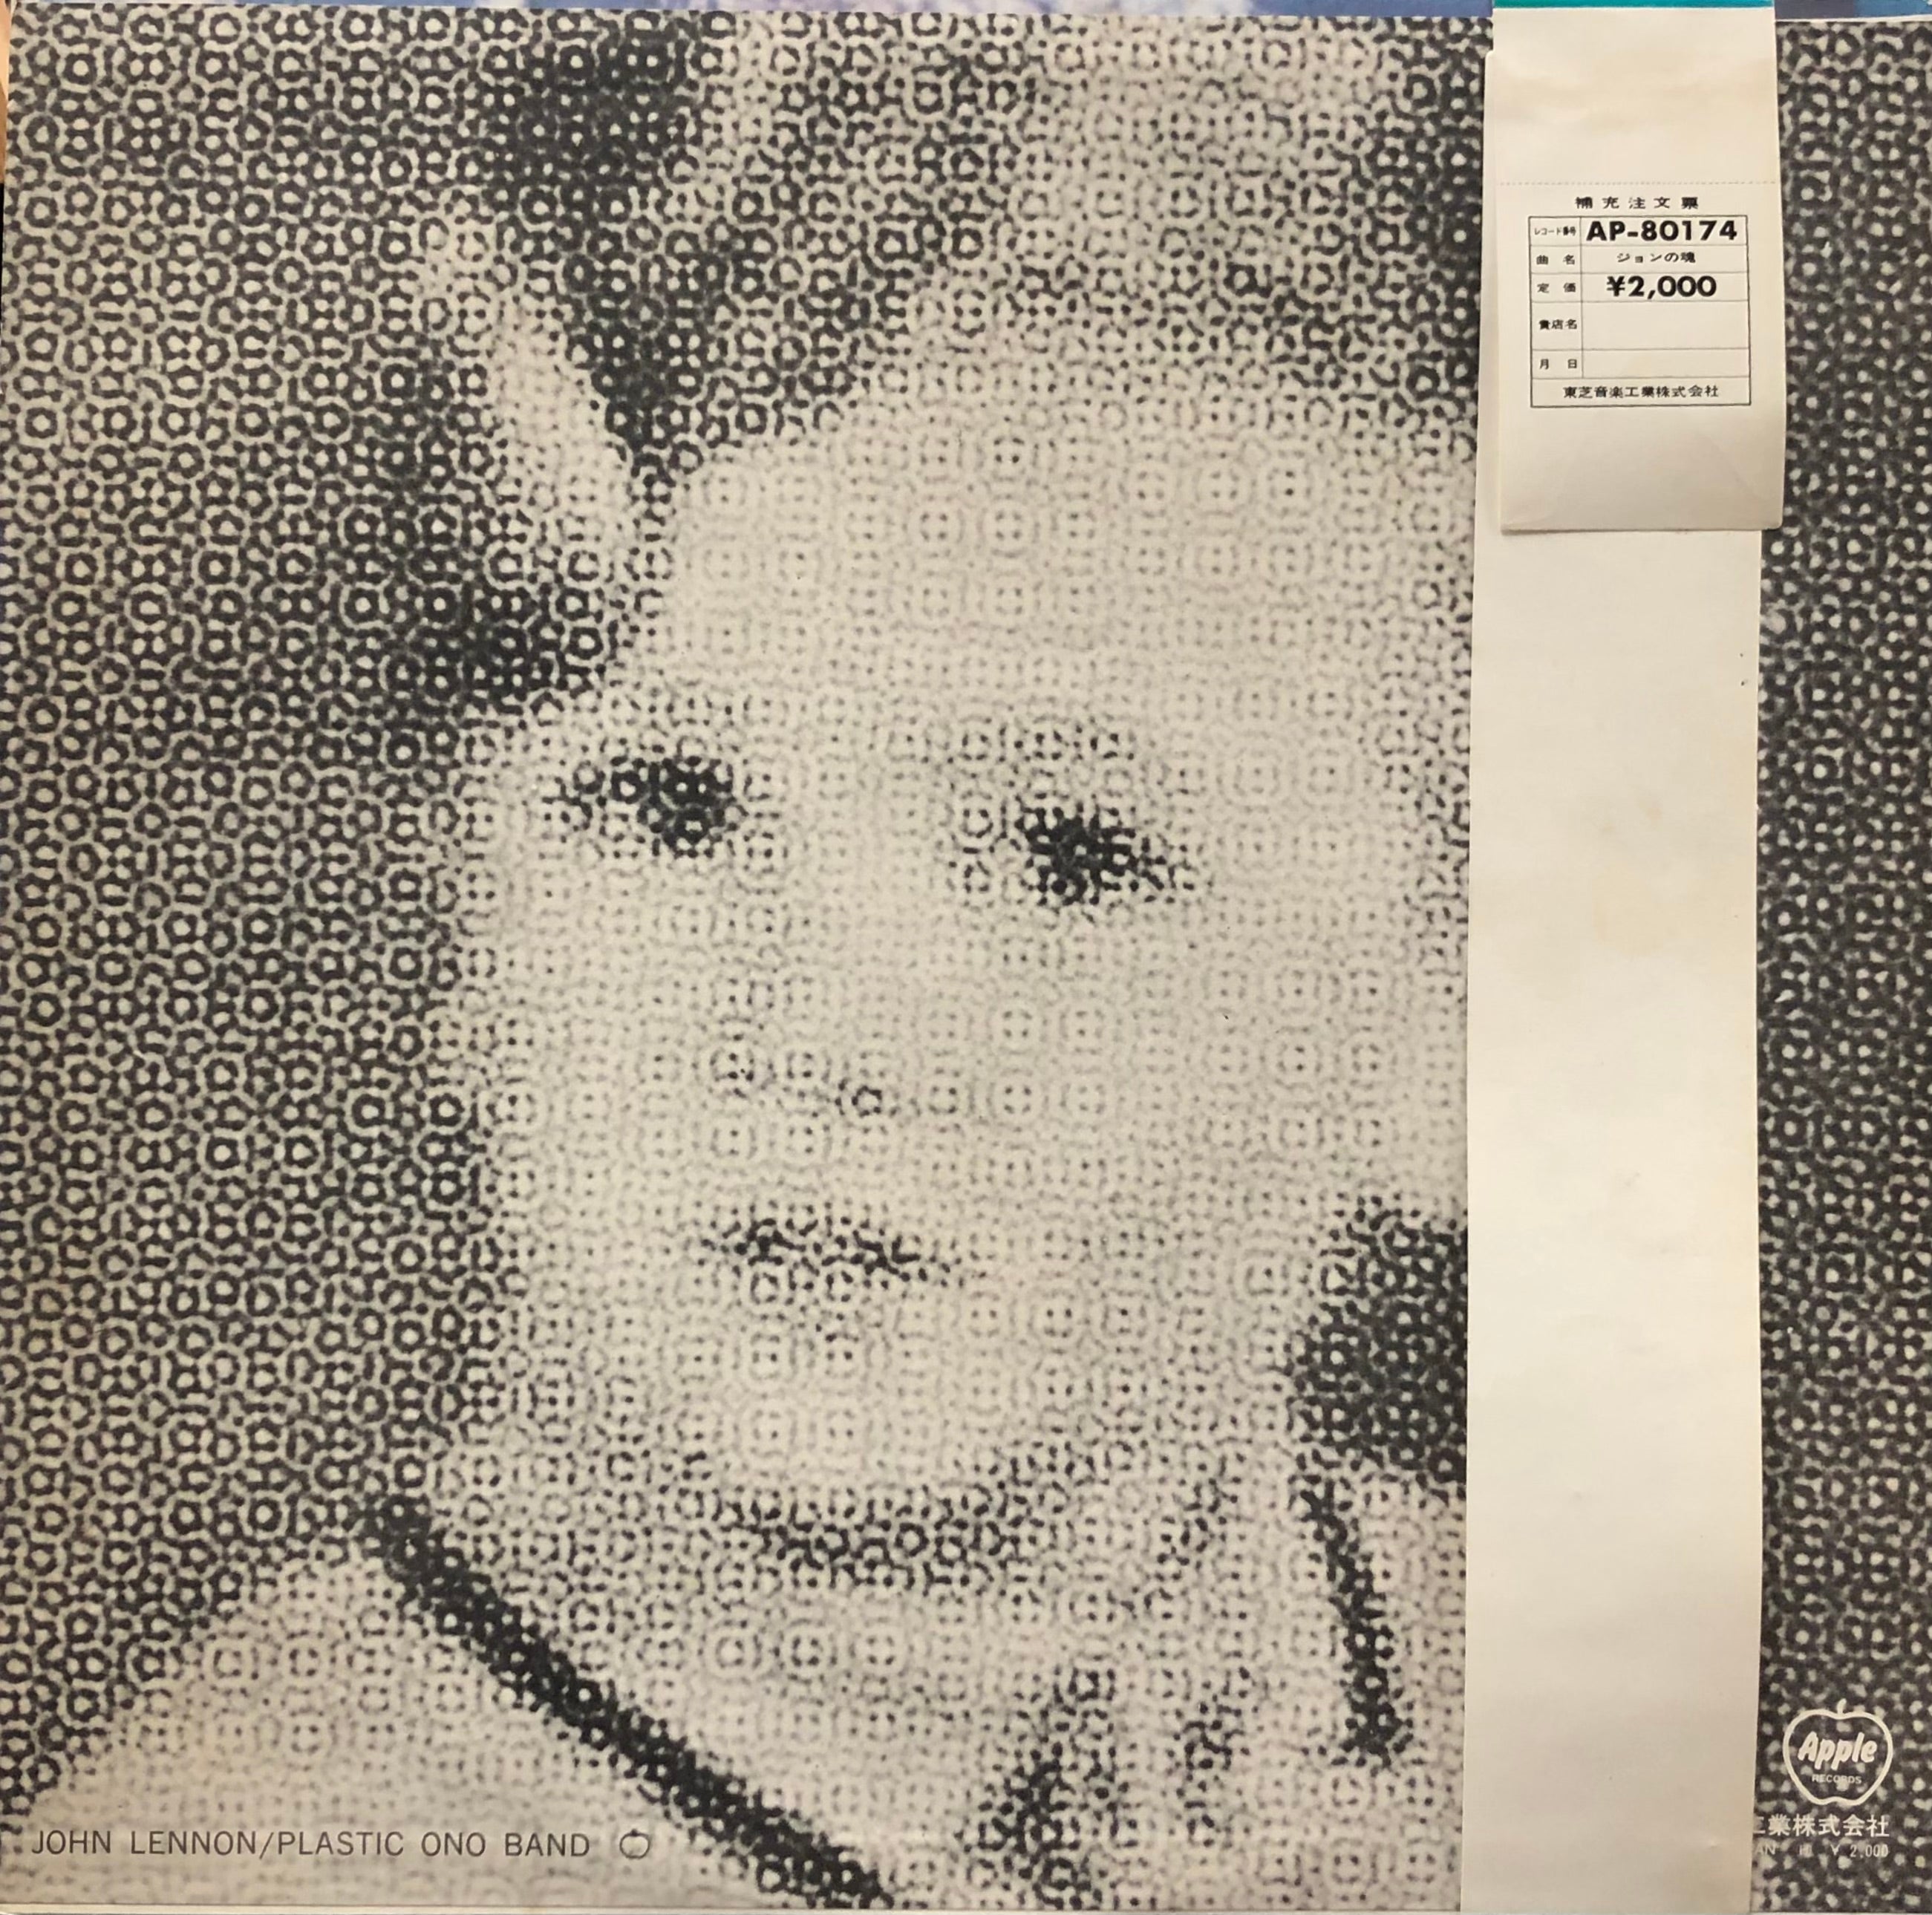 JOHN LENNON / Plastic Ono Band ジョンの魂 (Apple, AP-80174, LP